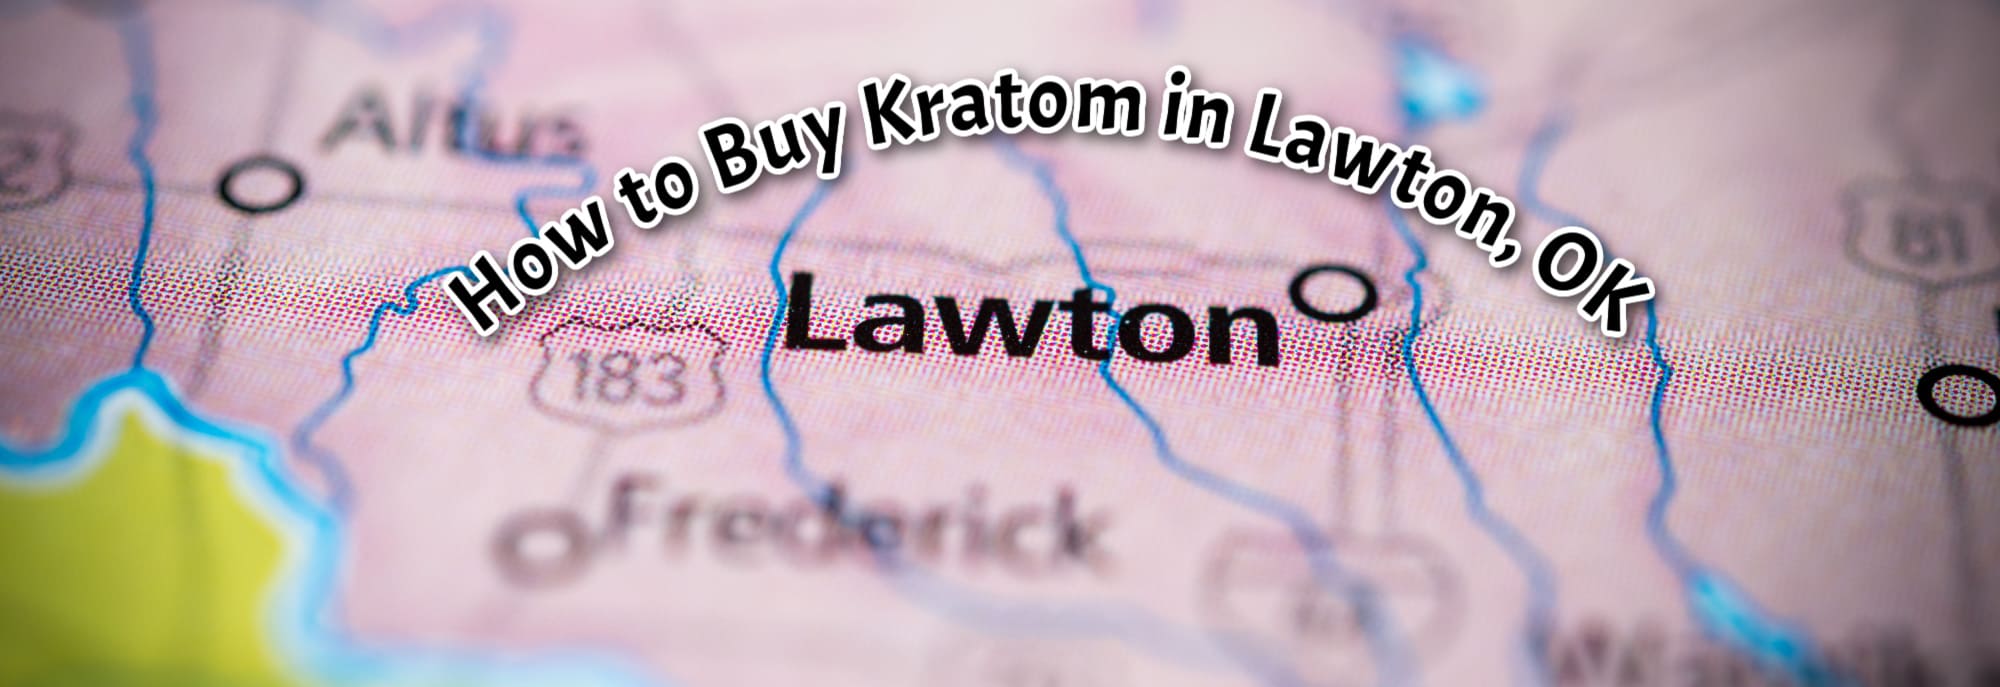 image of how to buy kratom in lawton ok